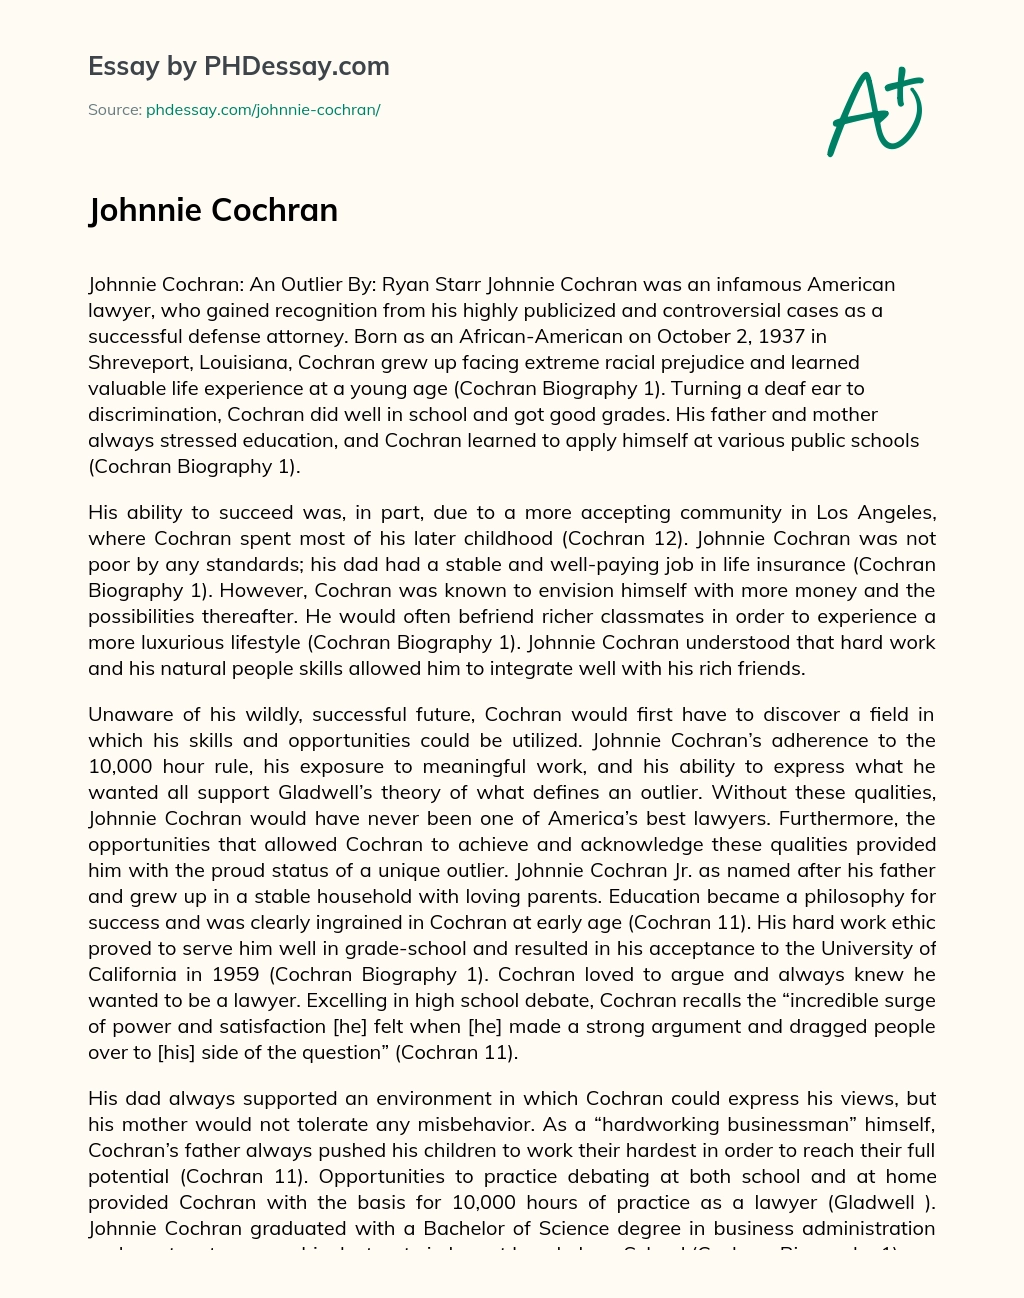 Johnnie Cochran essay